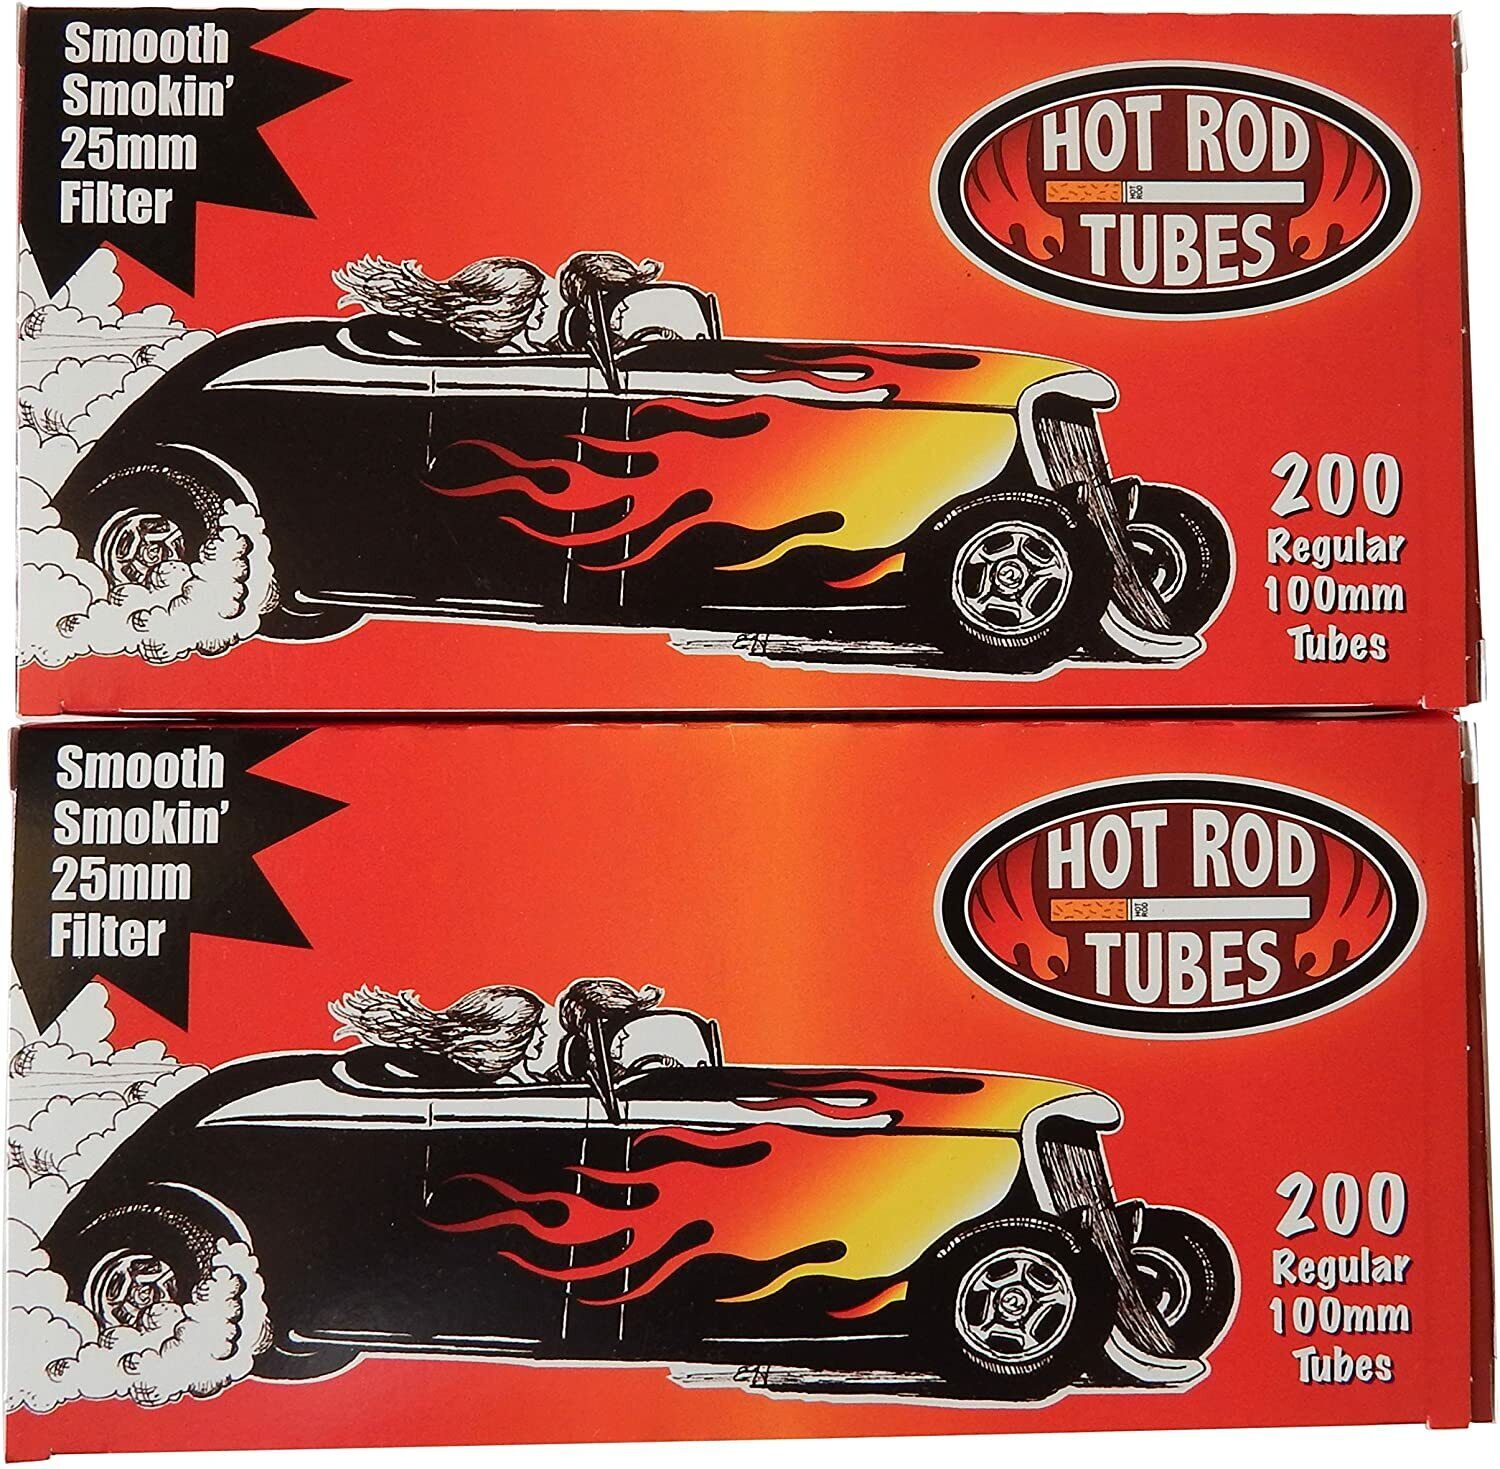 Hot Rod Regular 100mm Cigarette Tubes 200 Count Per Box [5-Boxes]